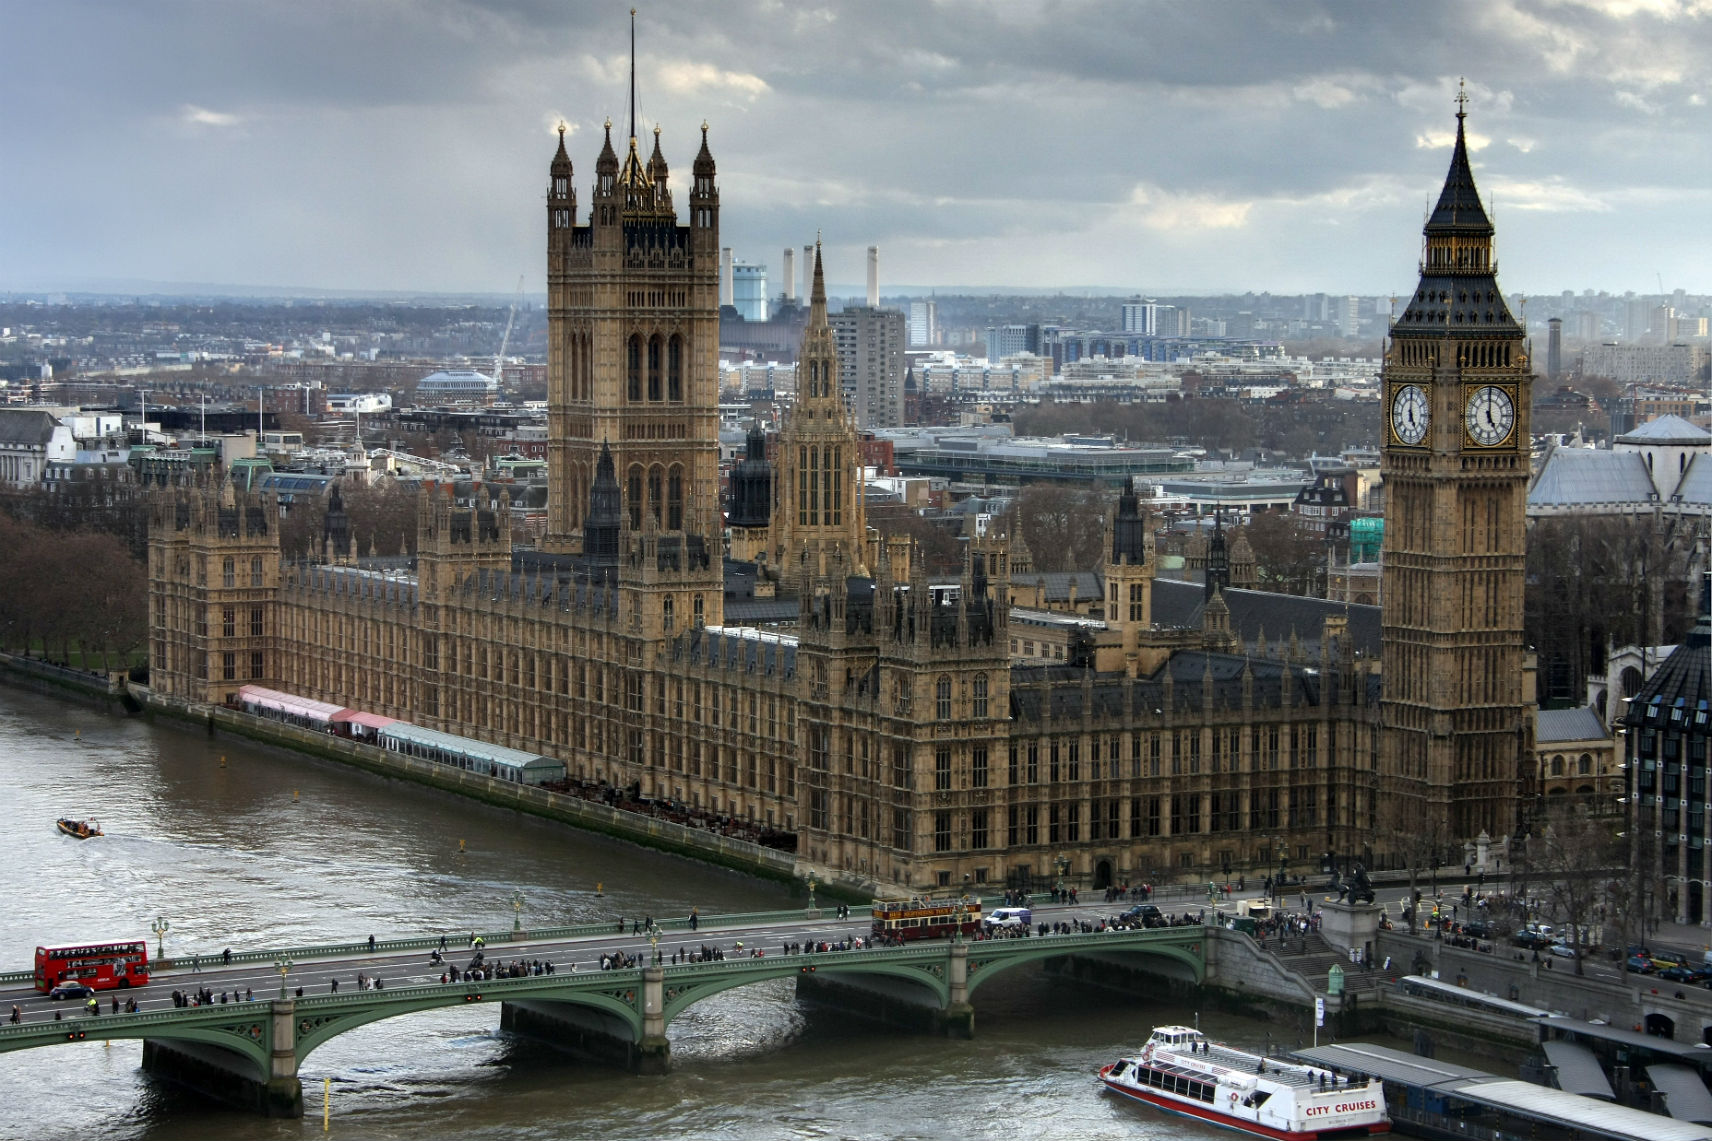 Embalagem suspeita causou susto no Parlamento britânico